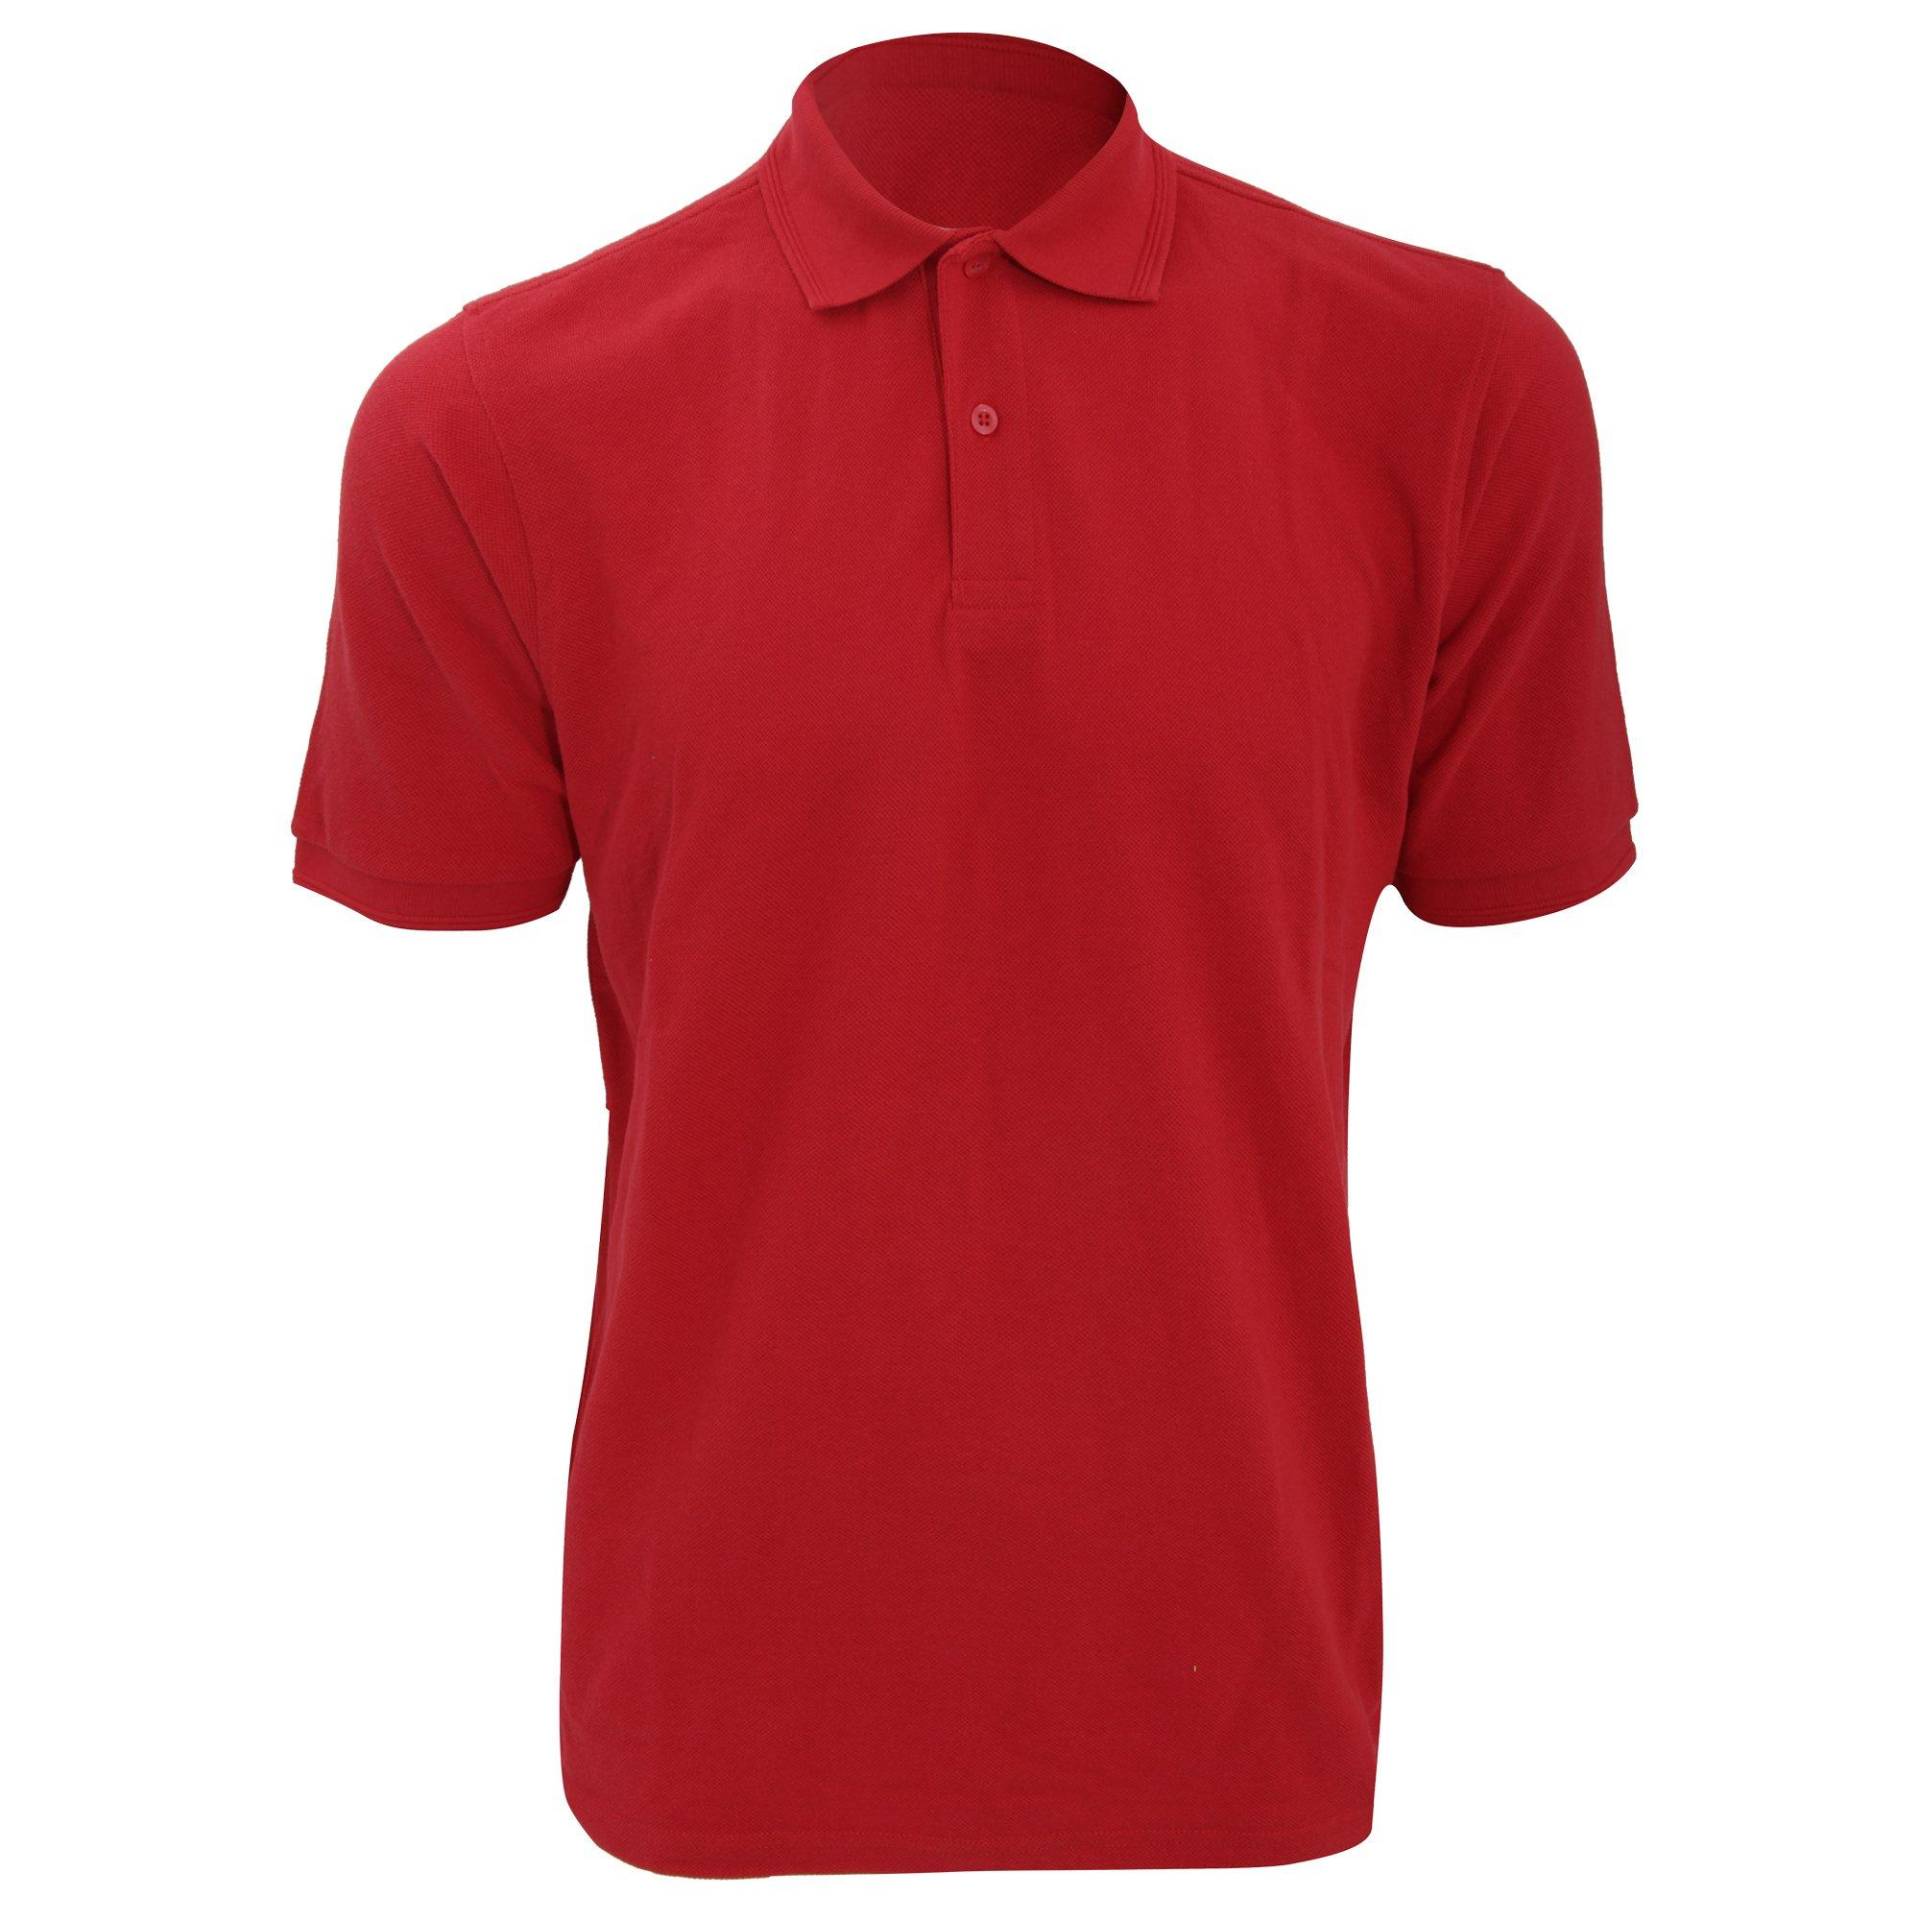 Ripple Collar & Cuff Kurzarm Polo Shirt Herren Rot Bunt XL von Russell